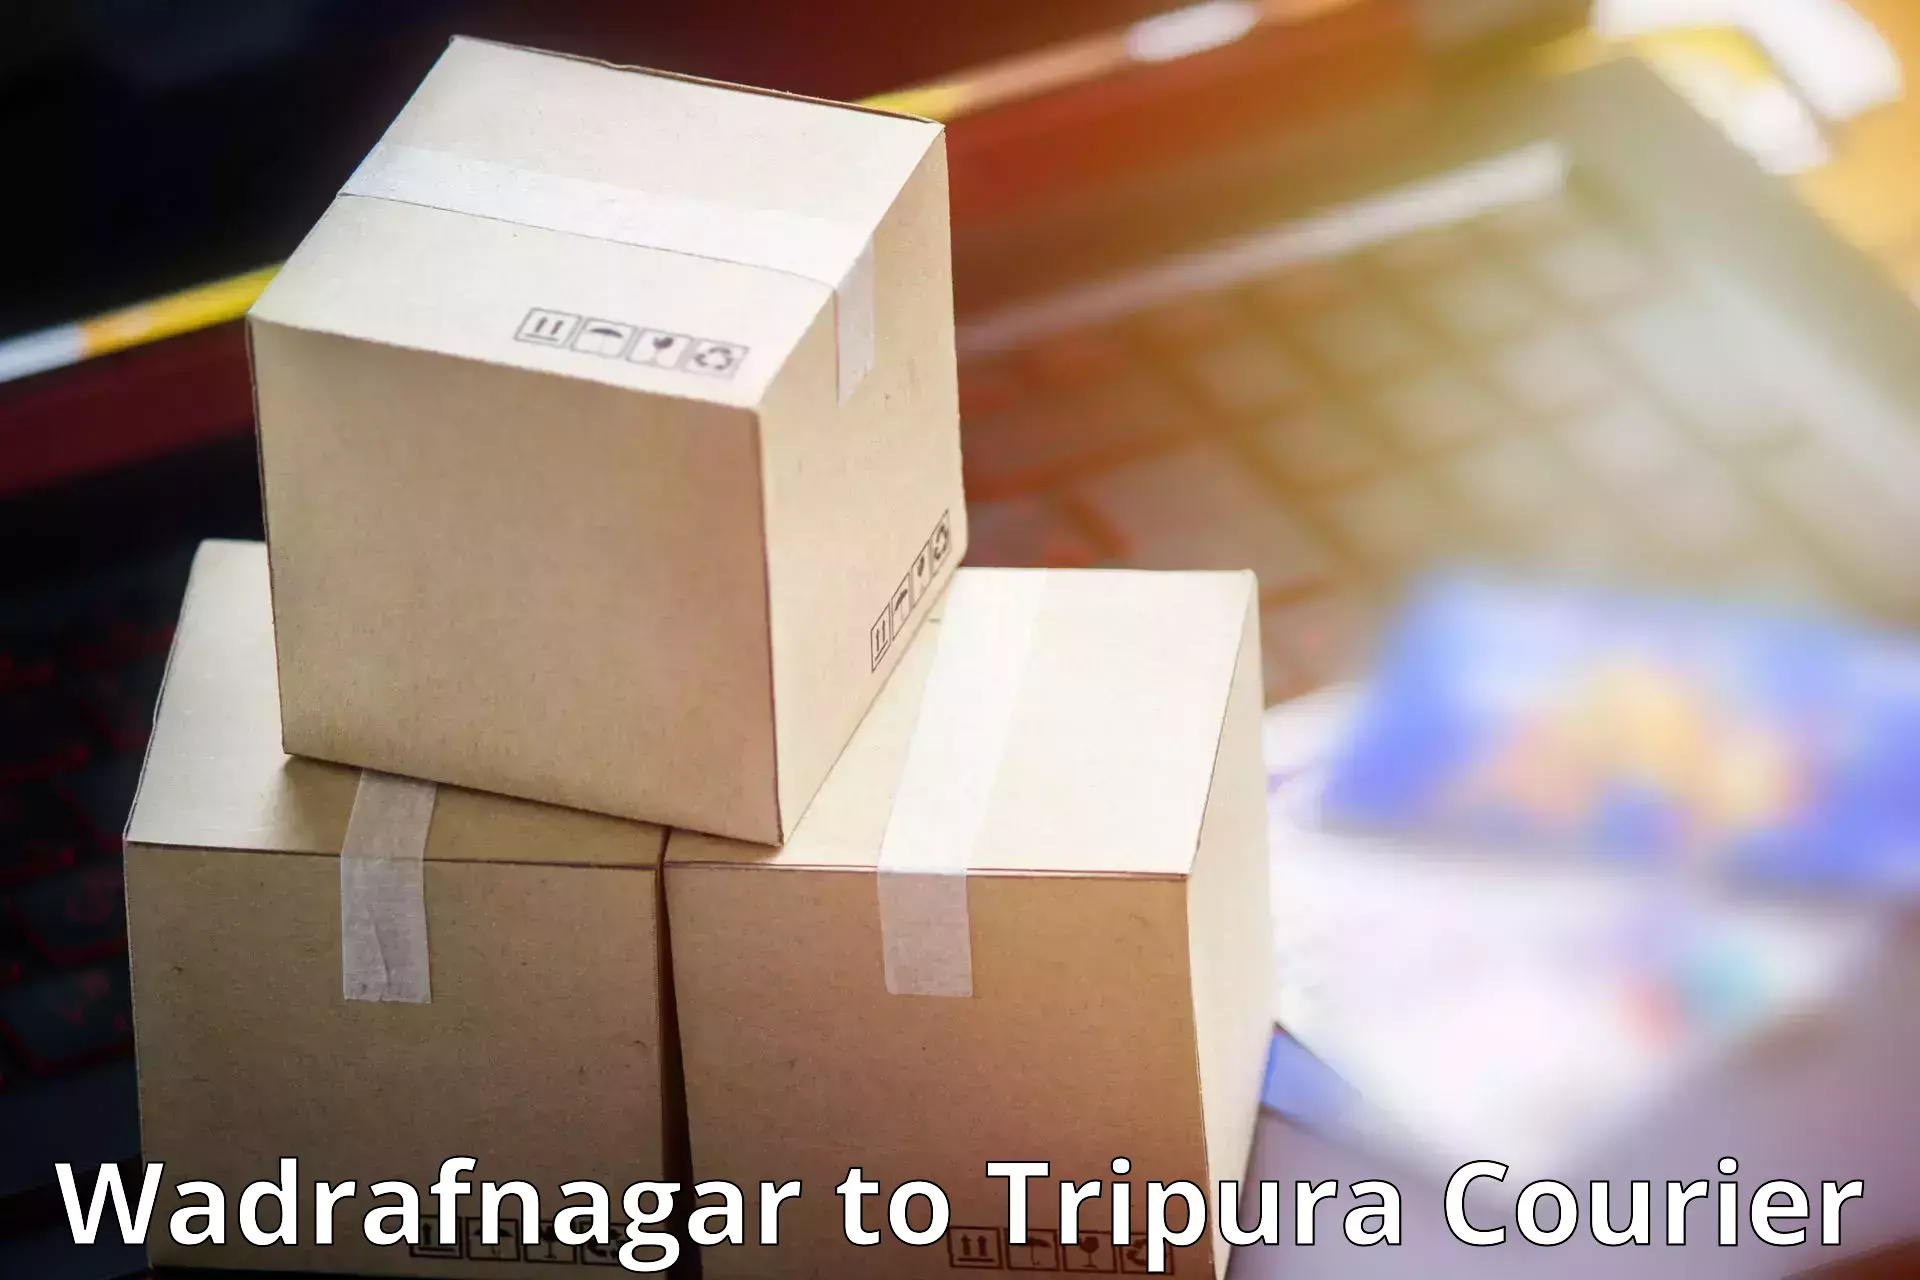 Courier services Wadrafnagar to Udaipur Tripura